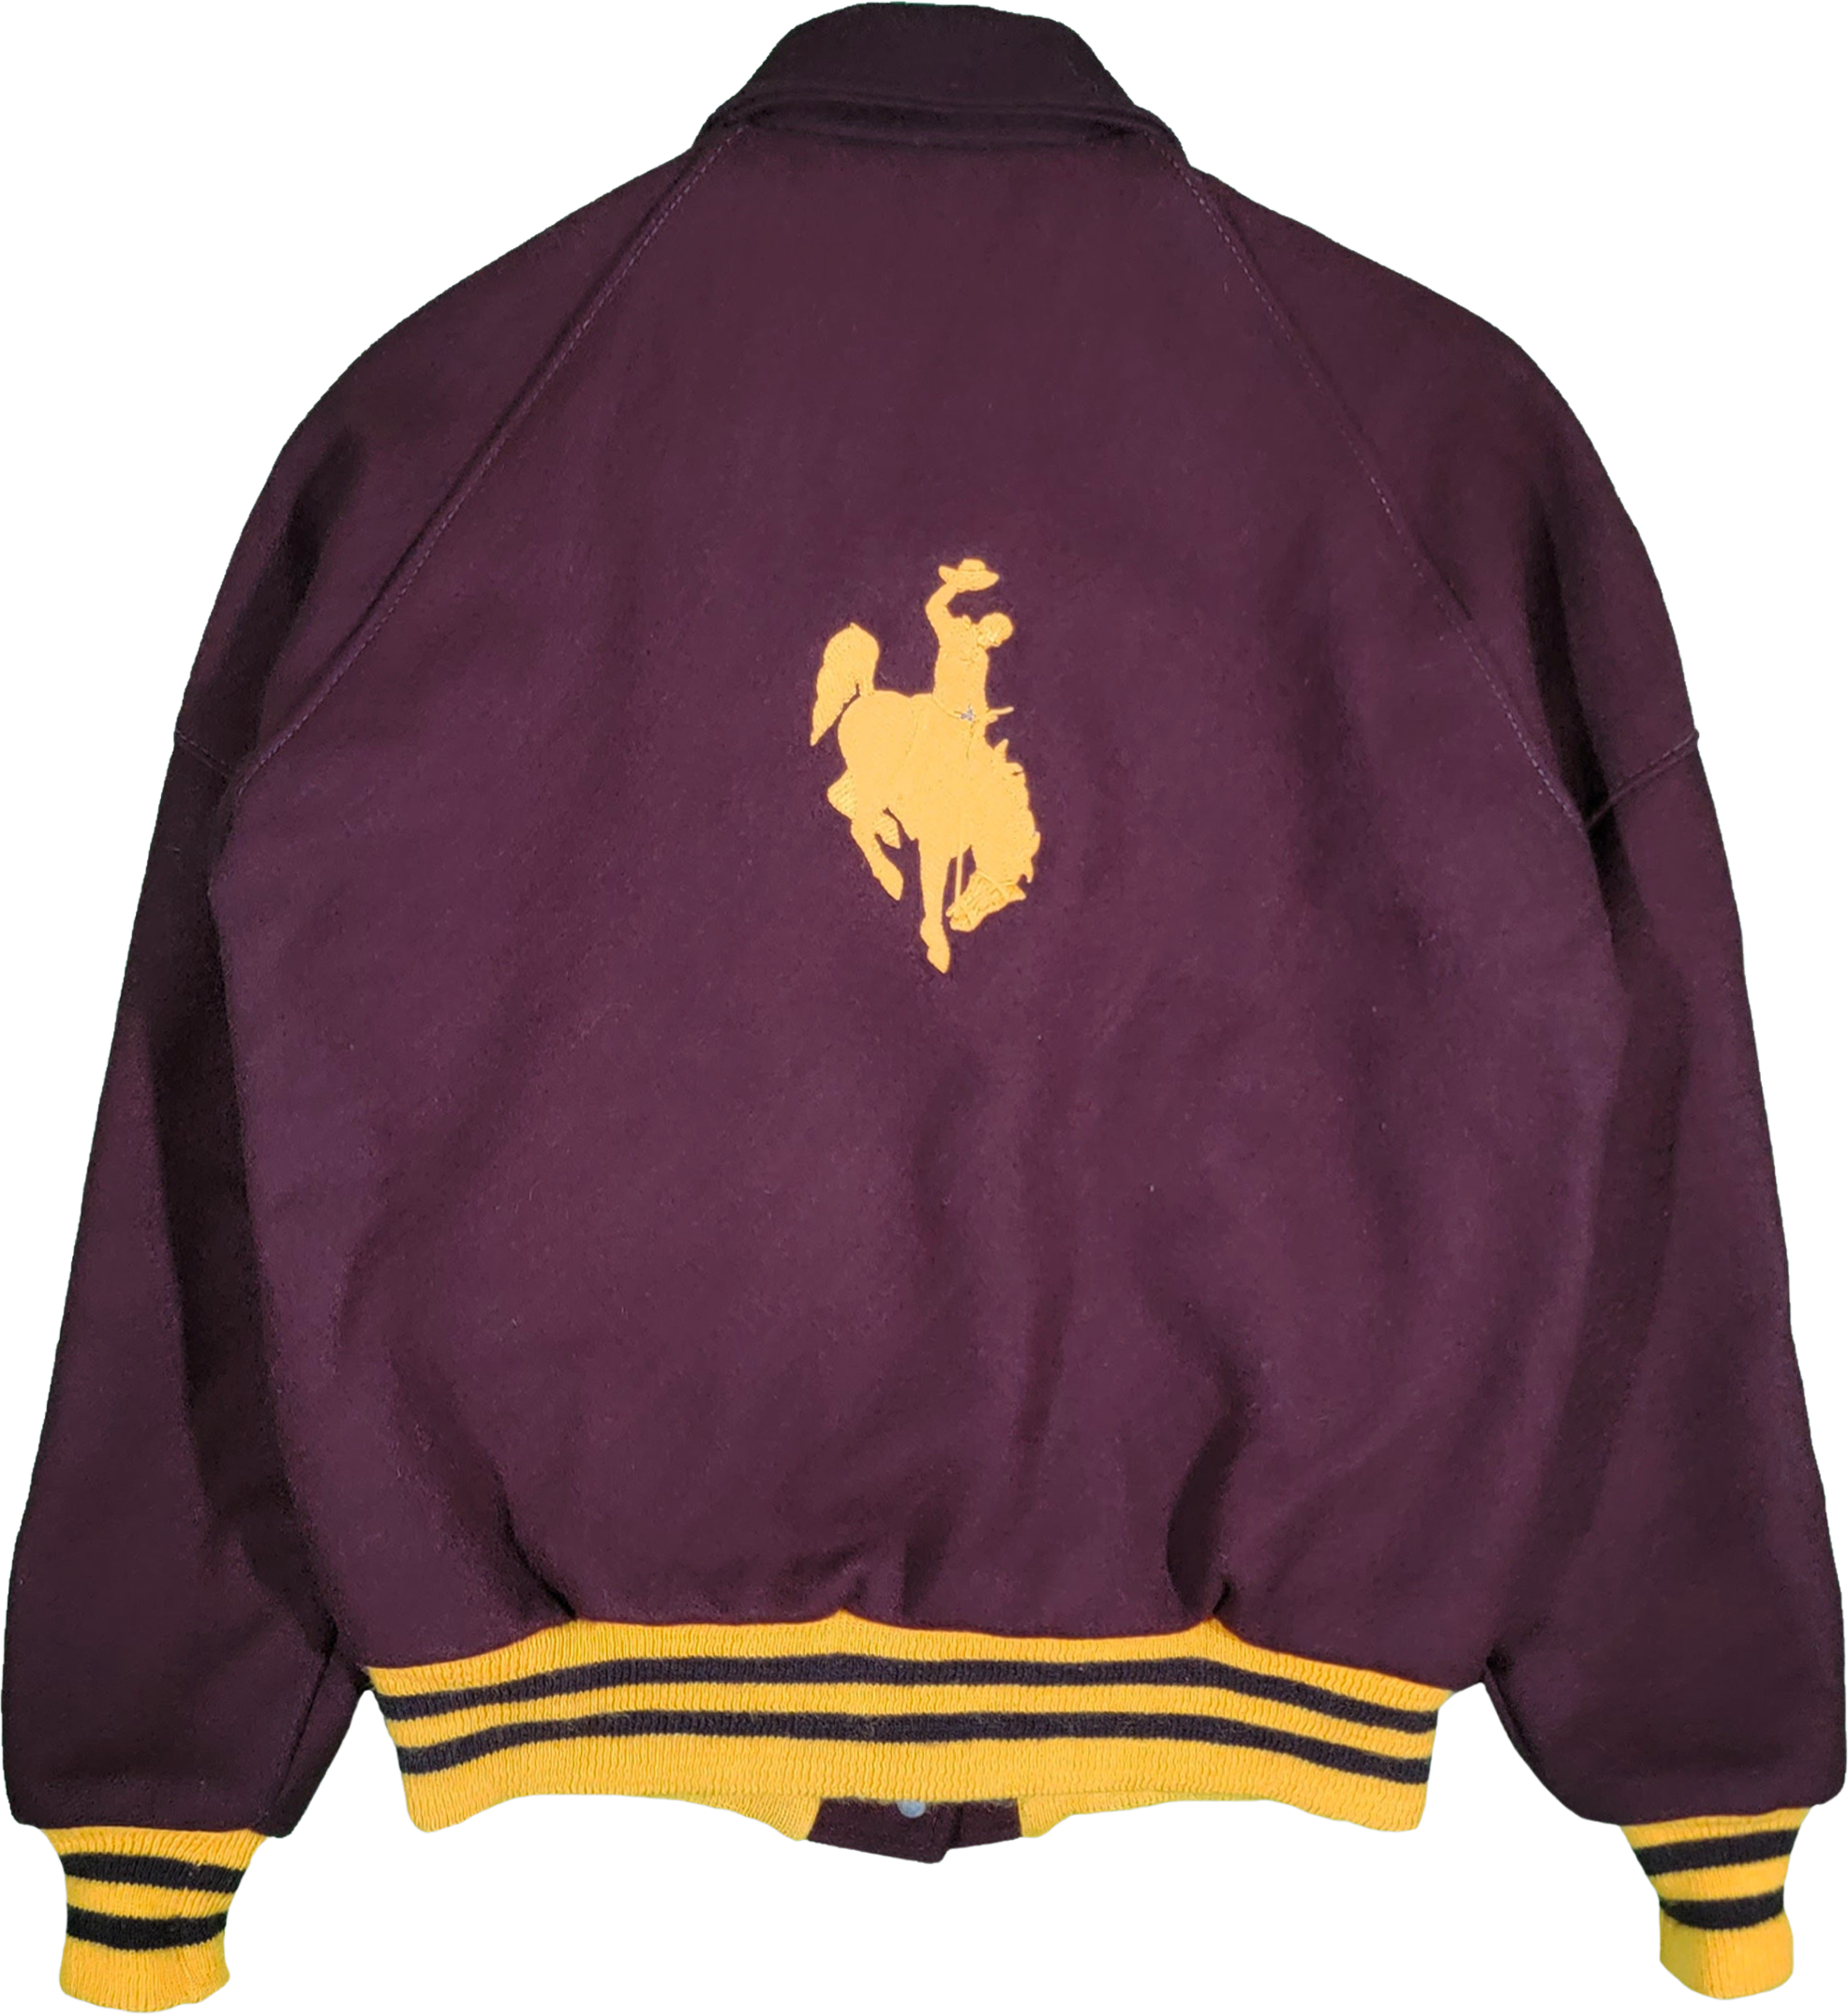 Vintage University of Louisville Cardinals Chalkline Jacket Sz M